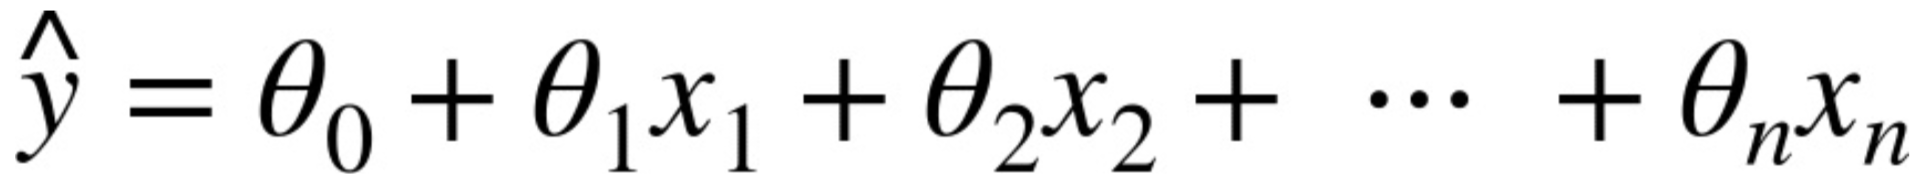 equation4-1